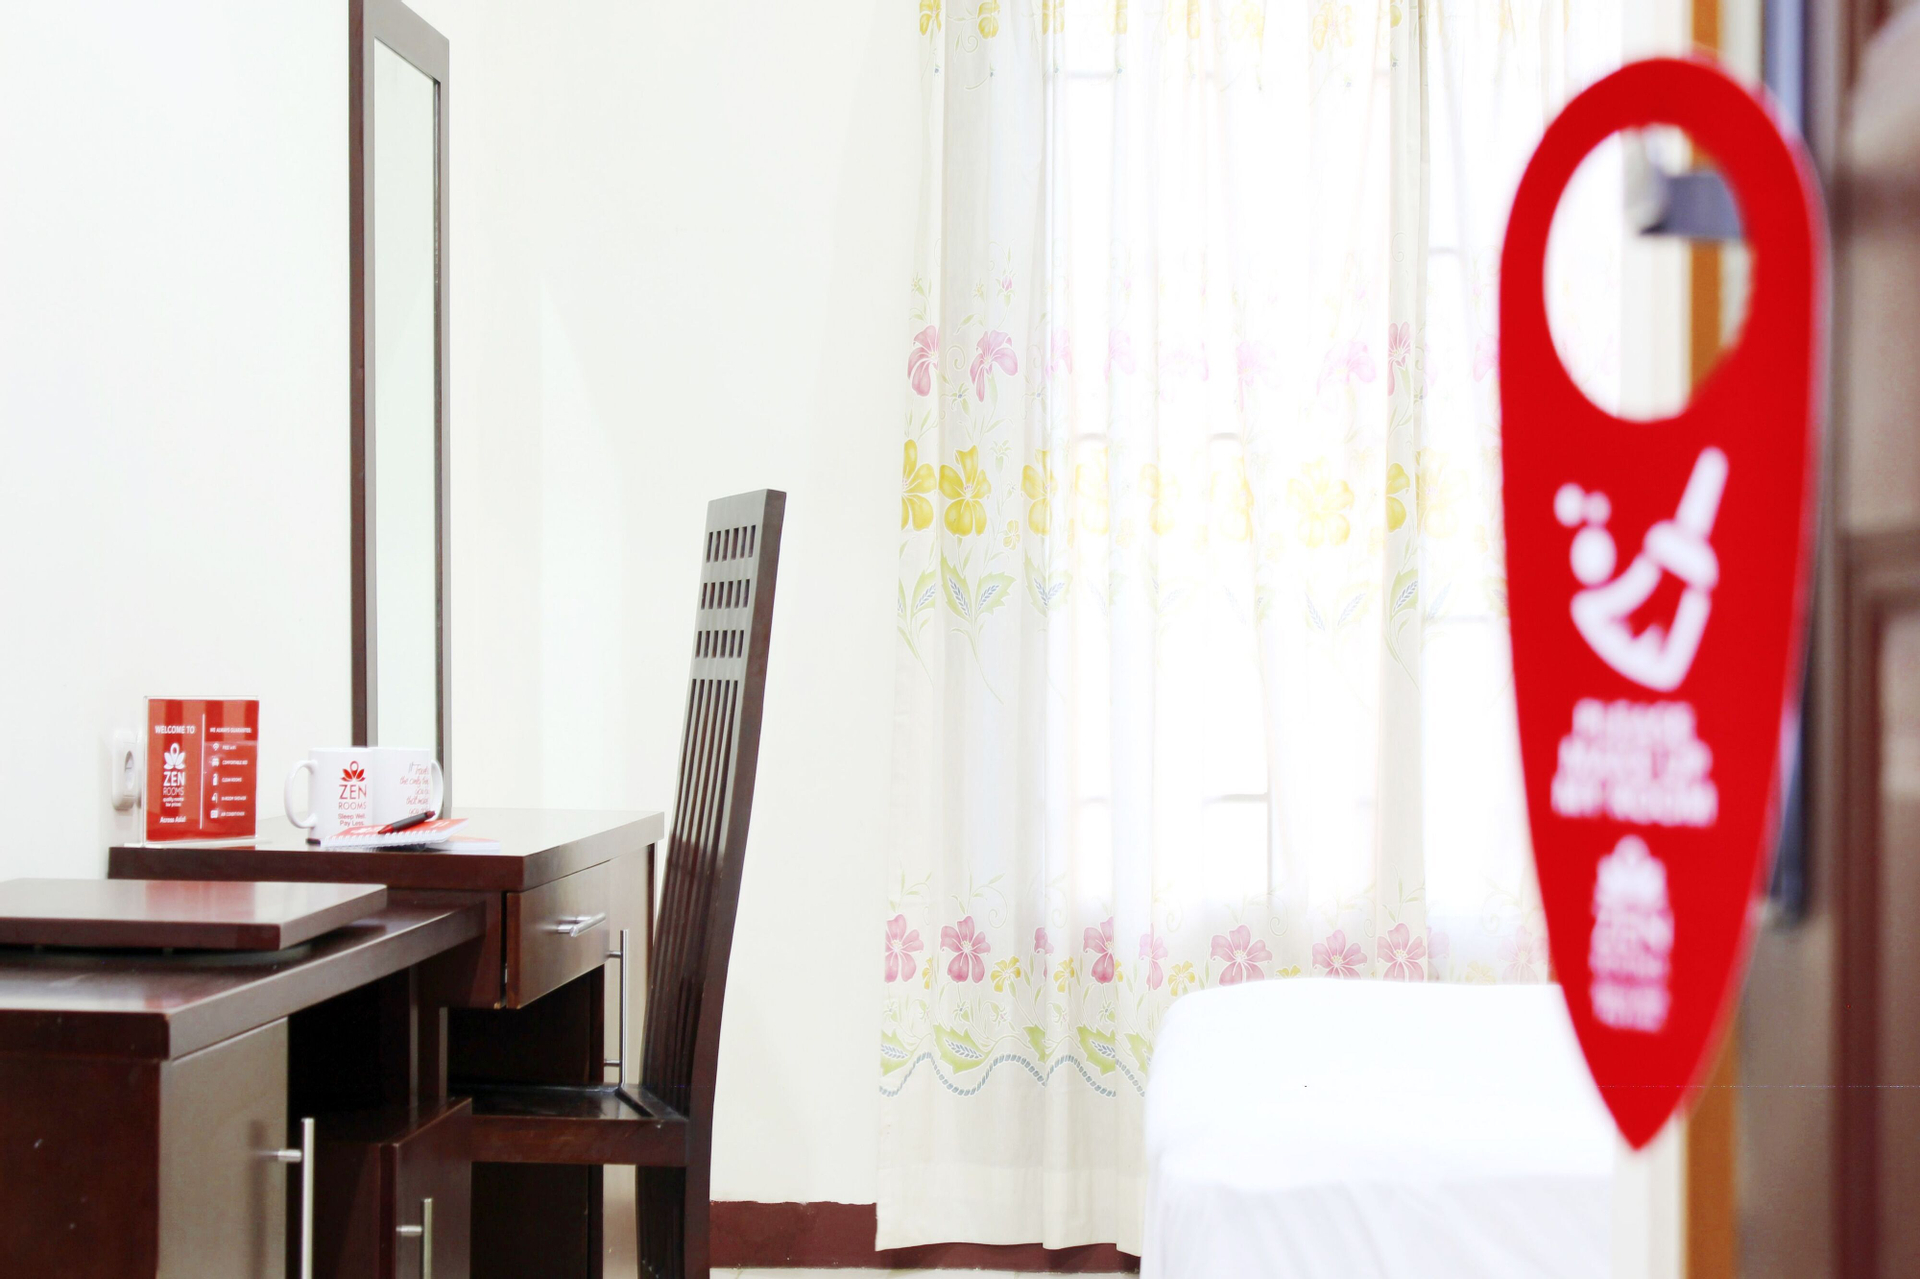 Hotel Naga Mas, Mojokerto Booking Murah di